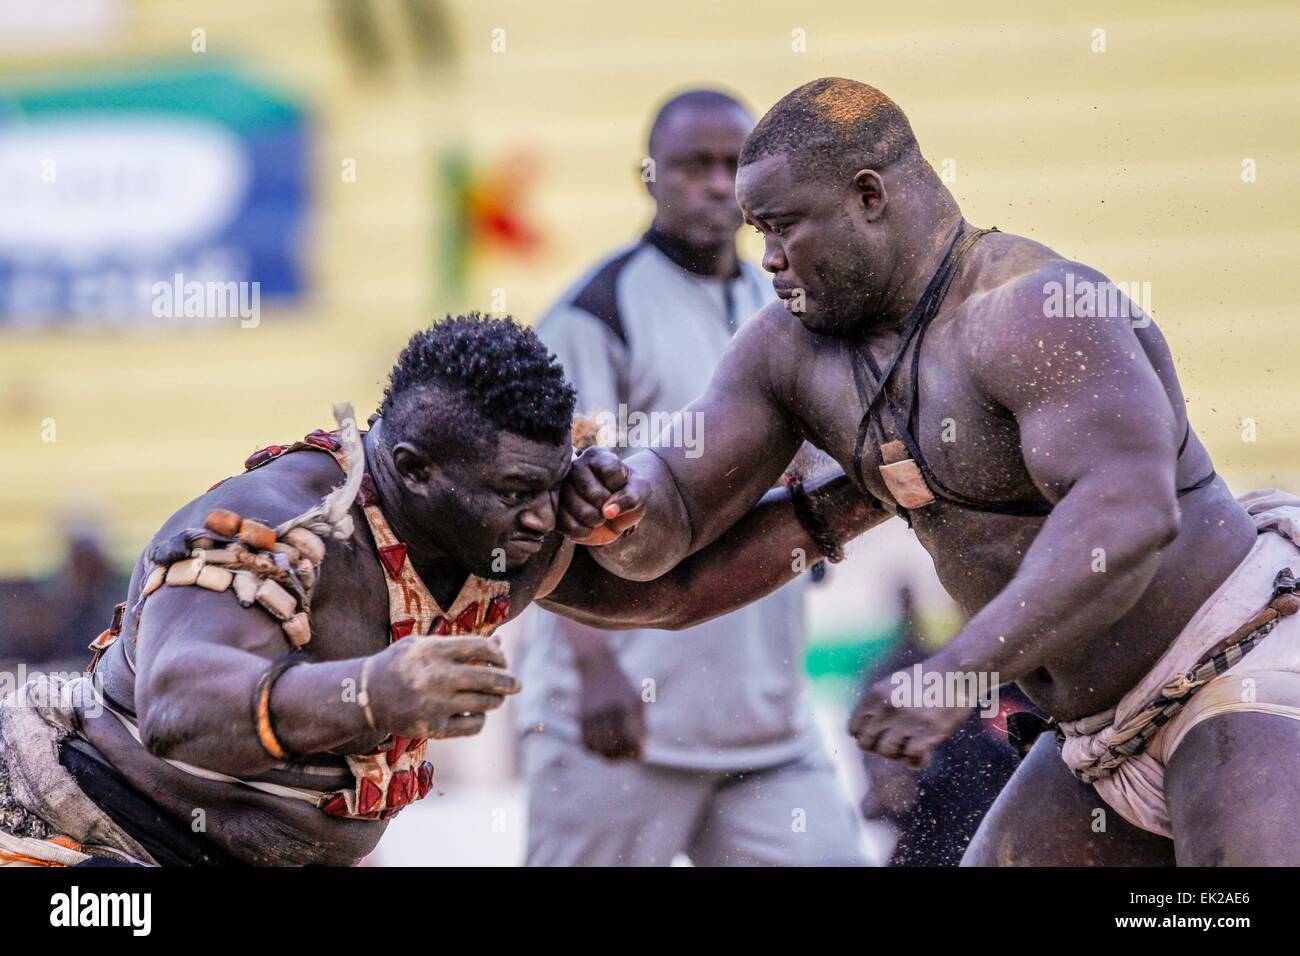 Dakar, Senegal. 5th Apr, 2015. Balla Gaye 2 (L) competes with Eumeu Sene  during the Senegalese traditional wrestling match "Le Choc" at Demba Diop  Stadium, Dakar, capital of Senegal, April 5, 2015.